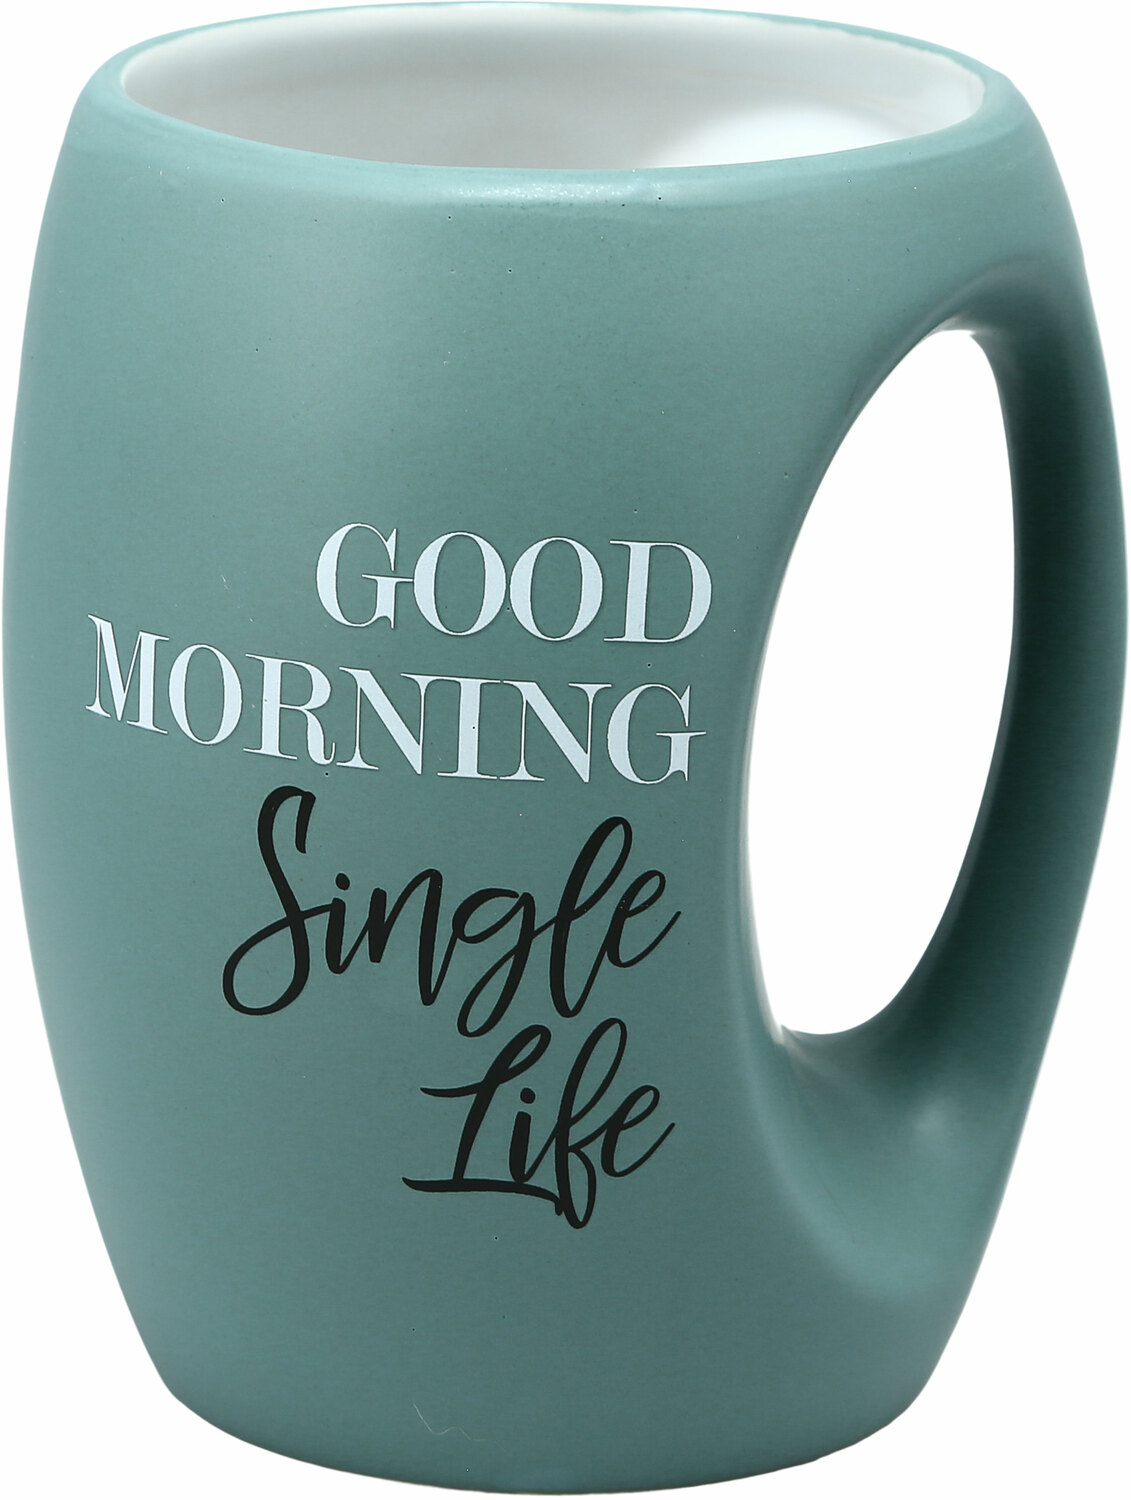 Single Life by Good Morning - Single Life - 16 oz Cup